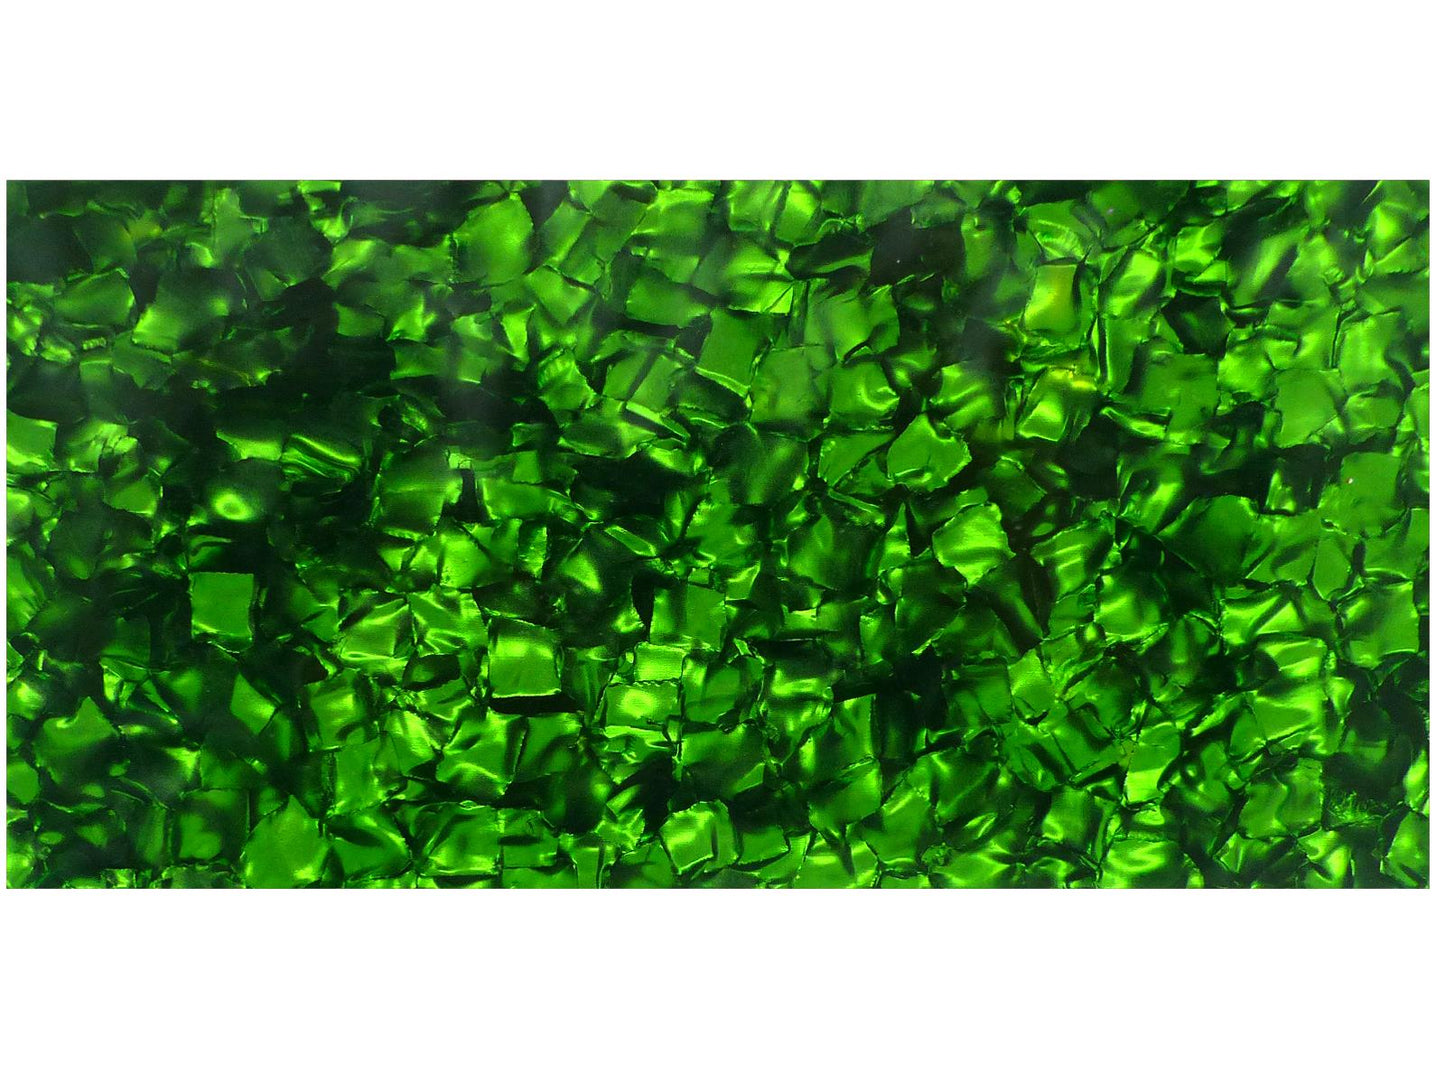 Incudo Green Pearloid Celluloid Sheet - 200x100x1.2mm (7.9x3.94x0.05")